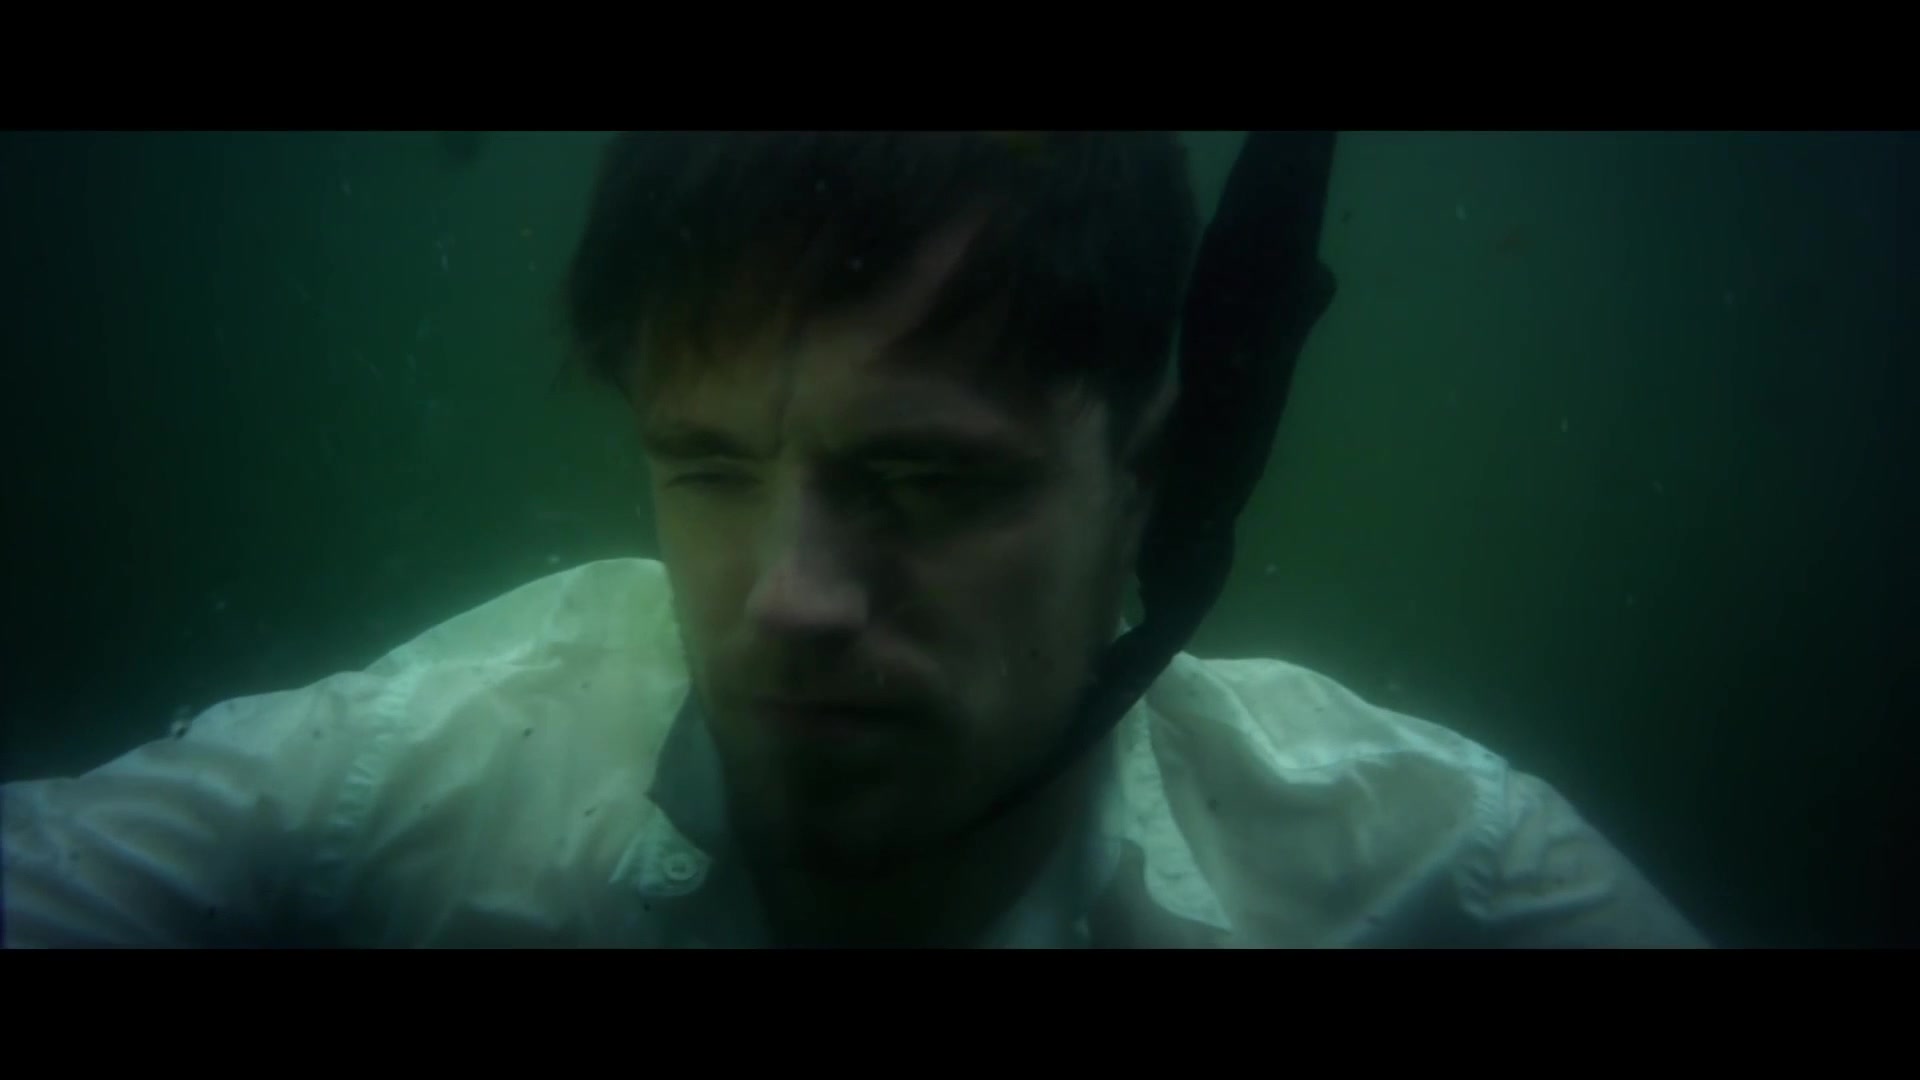 Norwegian singer drowning barefaced underwater